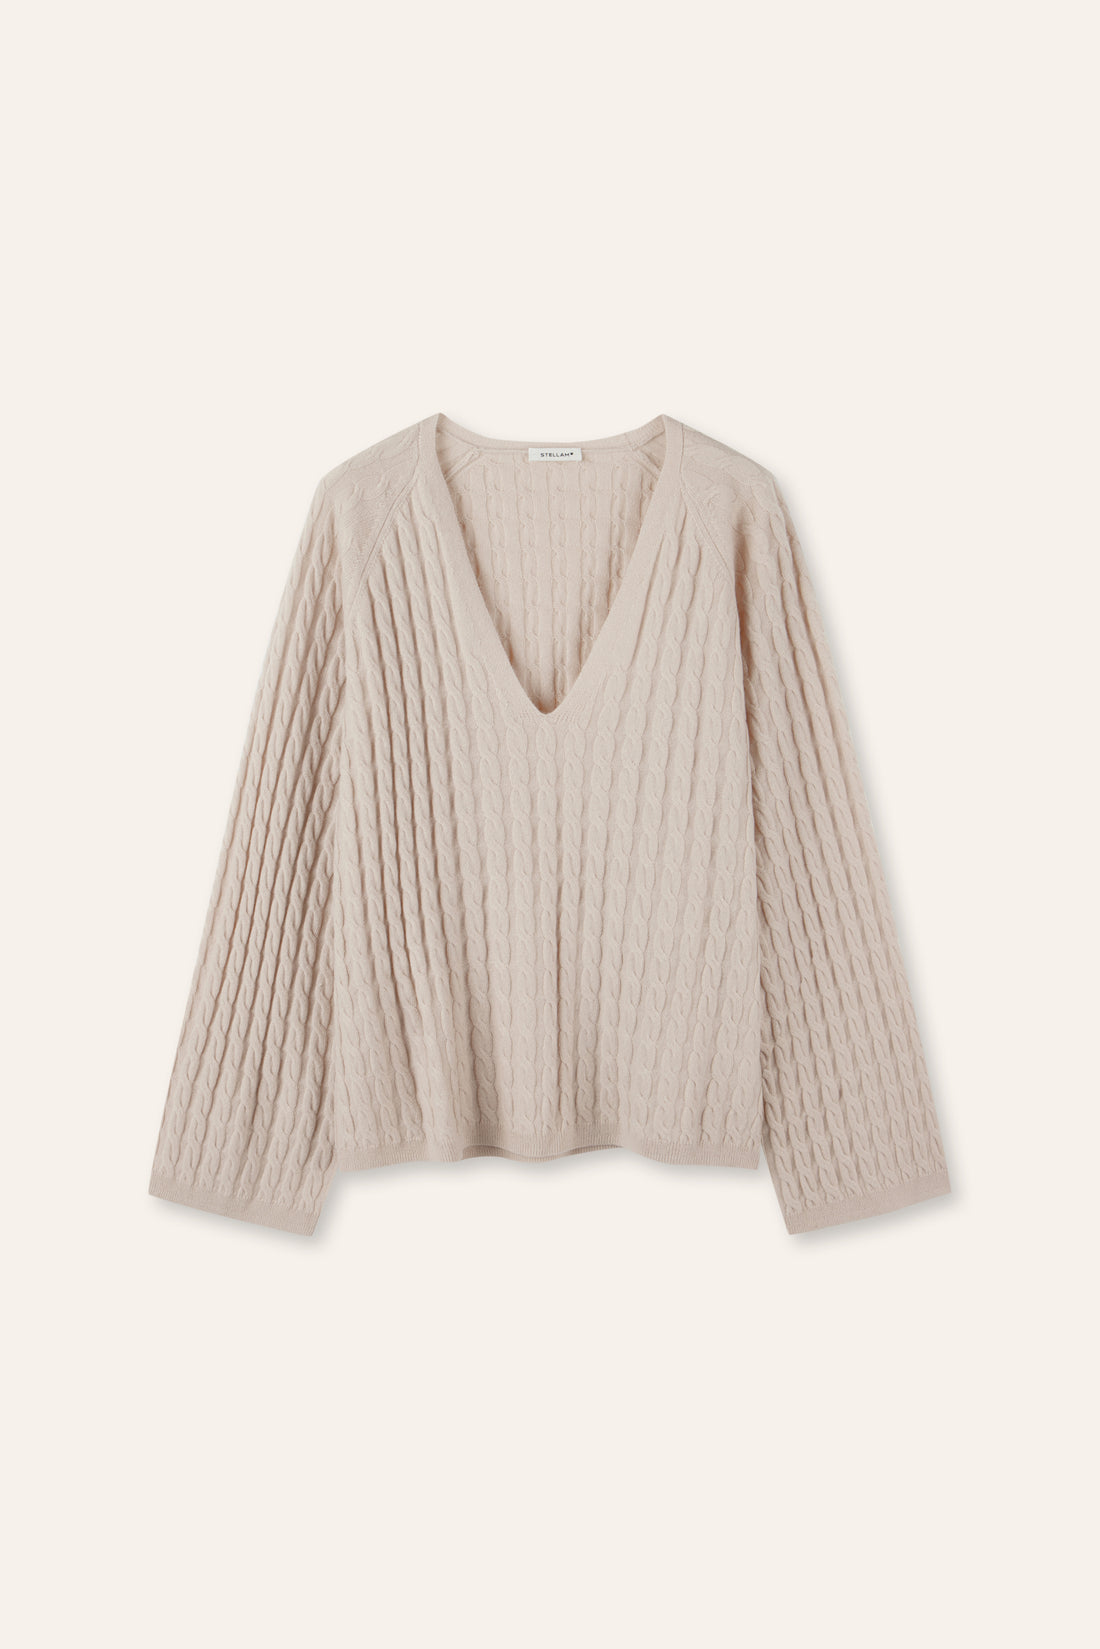 MONICA cashmere-blended V-neck sweater (Oatmeal)